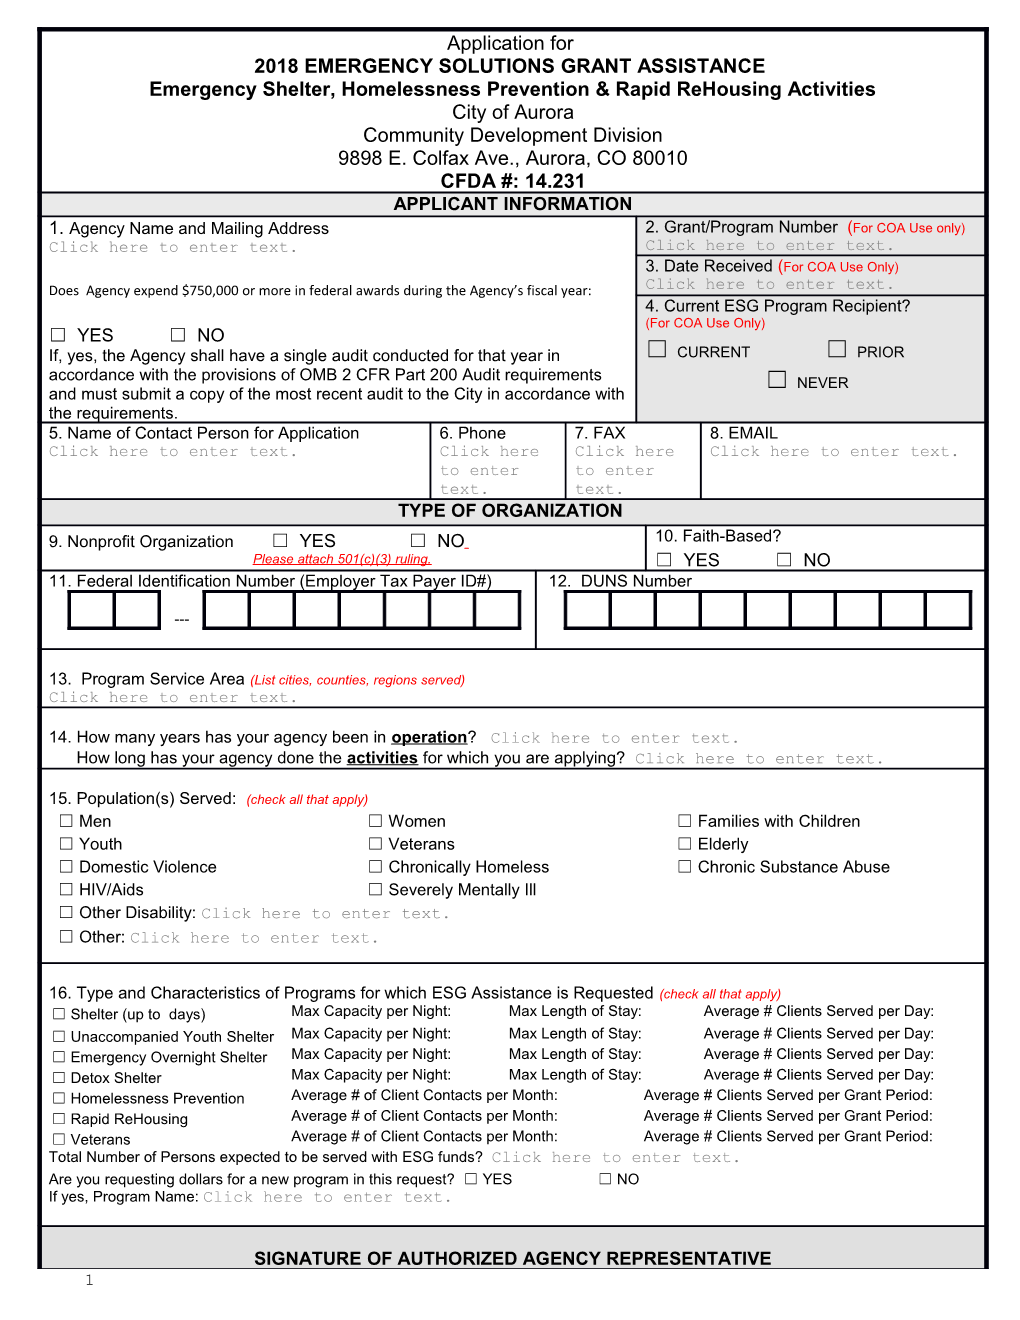 Application for Colorado Division of Housing (CDOH)